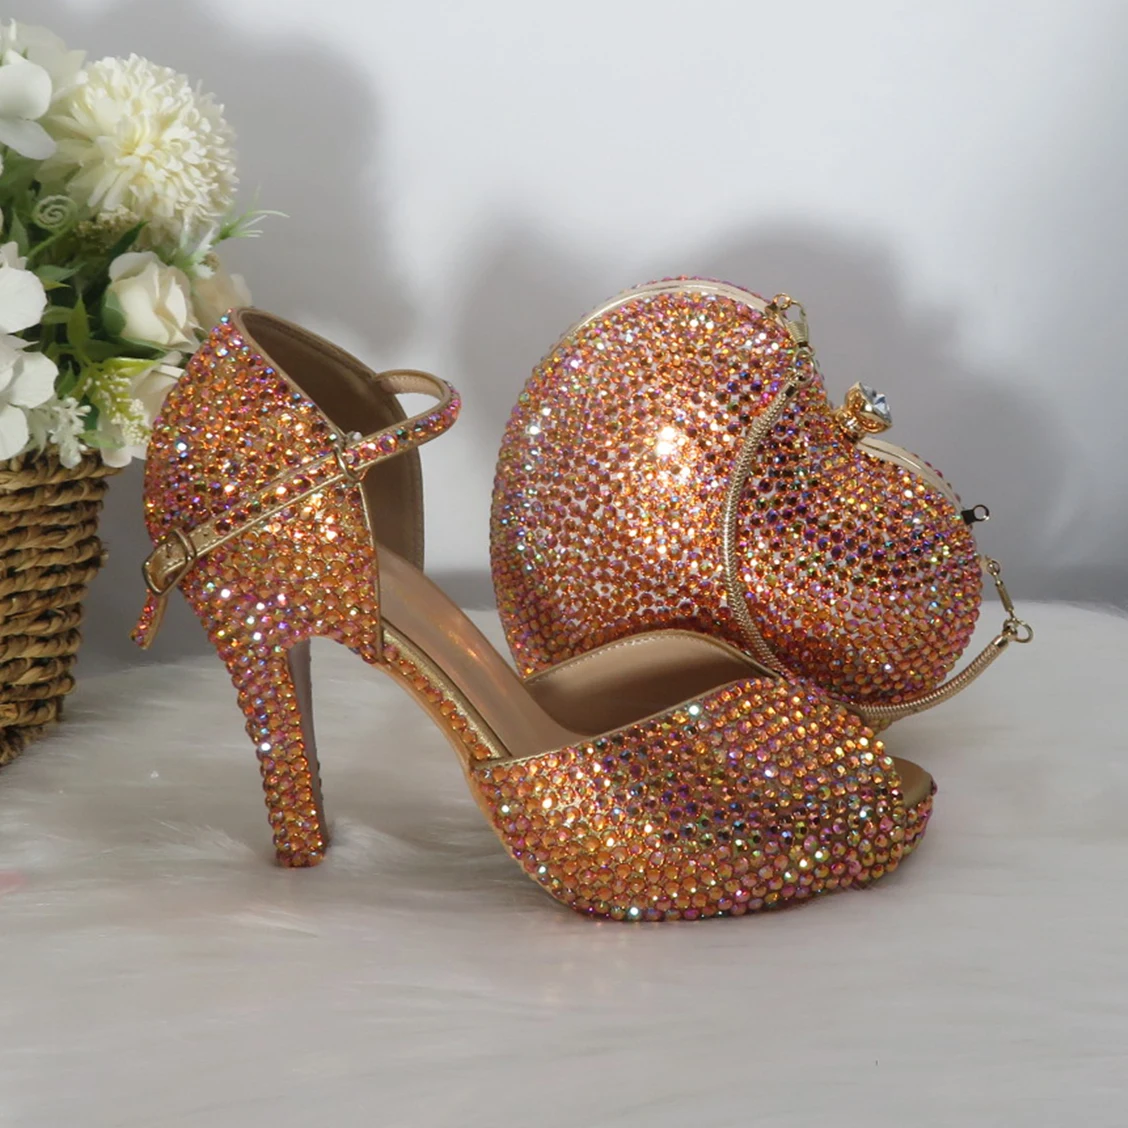 BaoYaFang Bling Crystal Summer Sandal Woman 2020 High heels Platform Shoes Ladies Big size Open Toe  wedding shoes bag set Bride